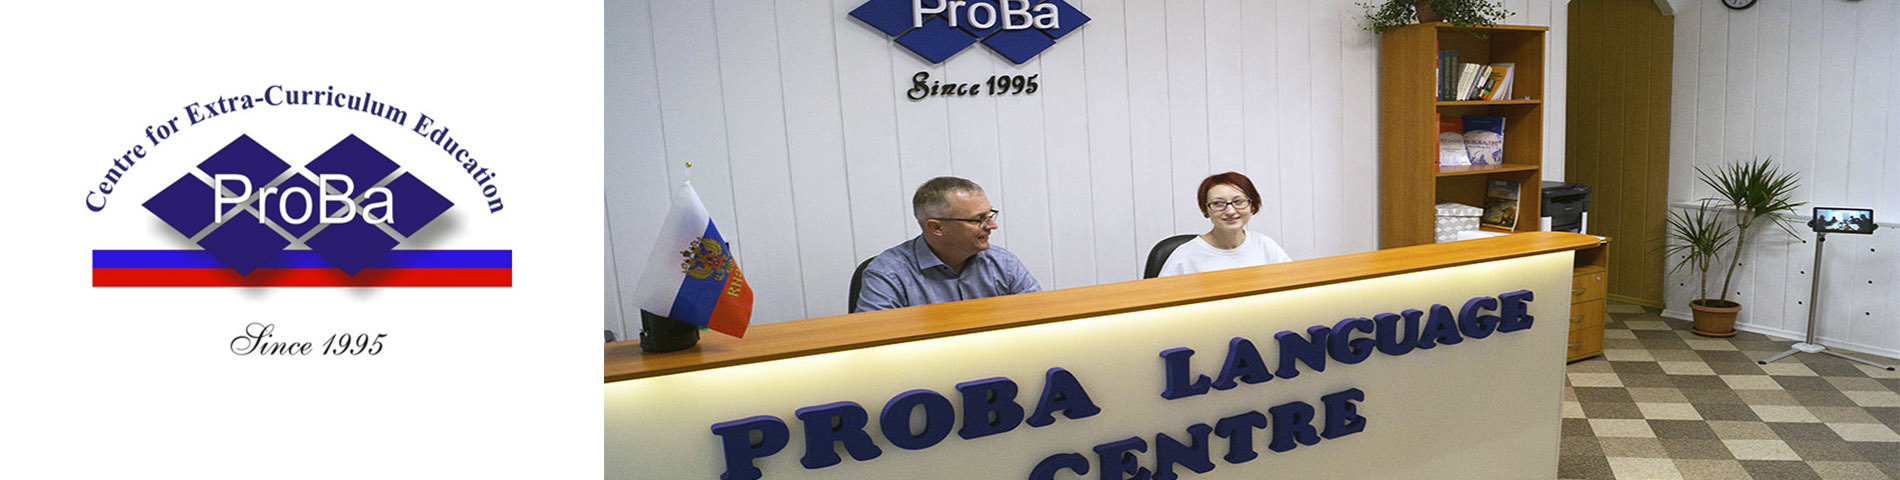 ProBa Educational Centre foto 1